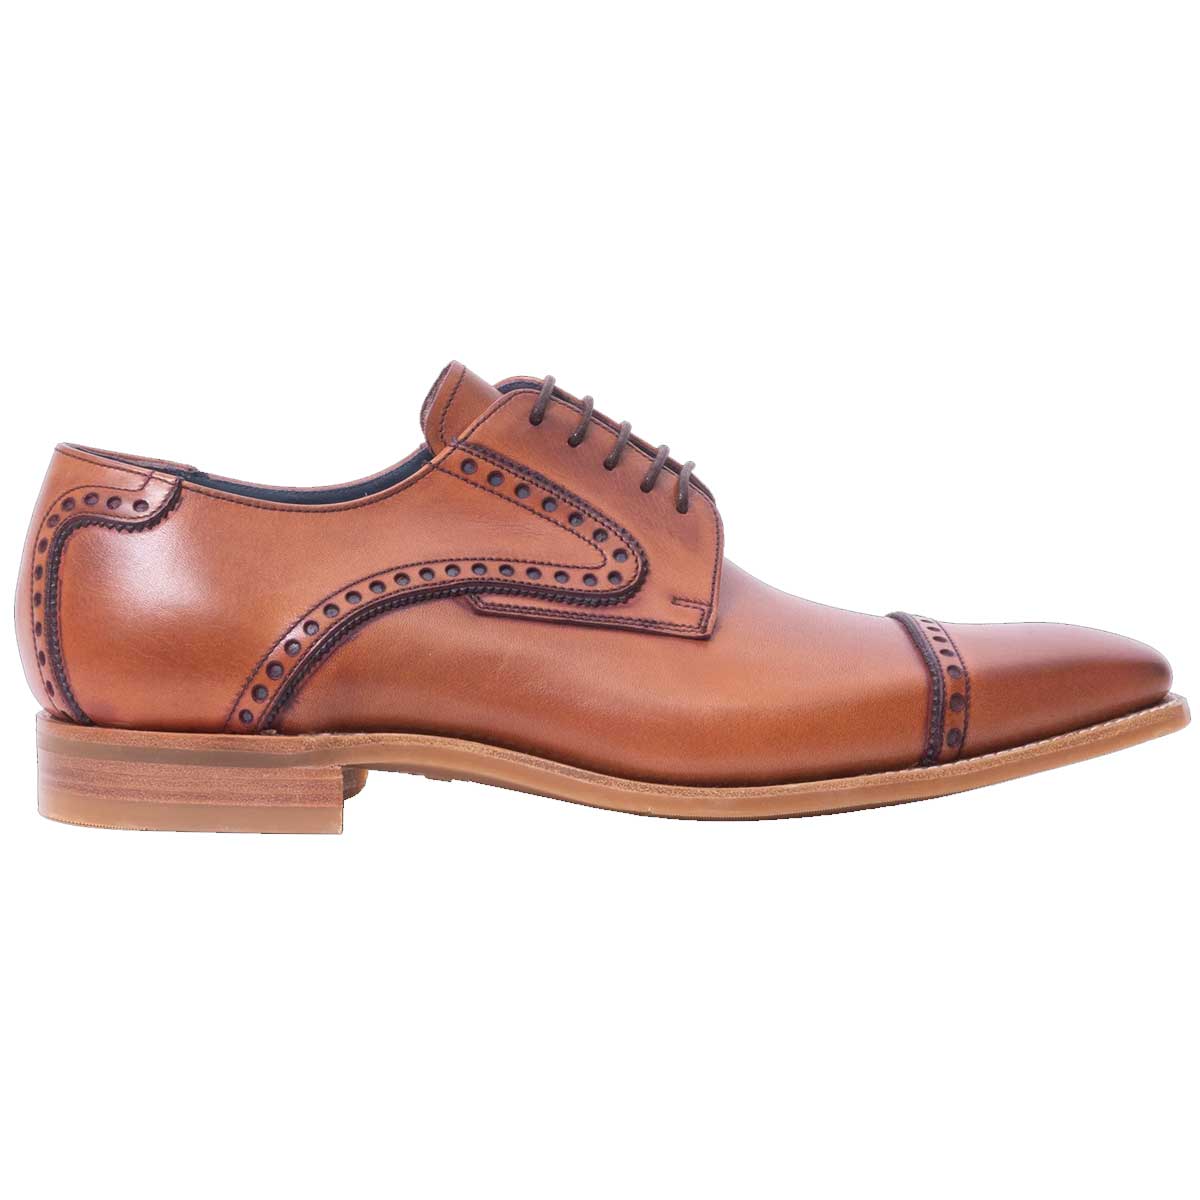 BARKER Stewart Shoes - Mens - Antique Rosewood/ Navy